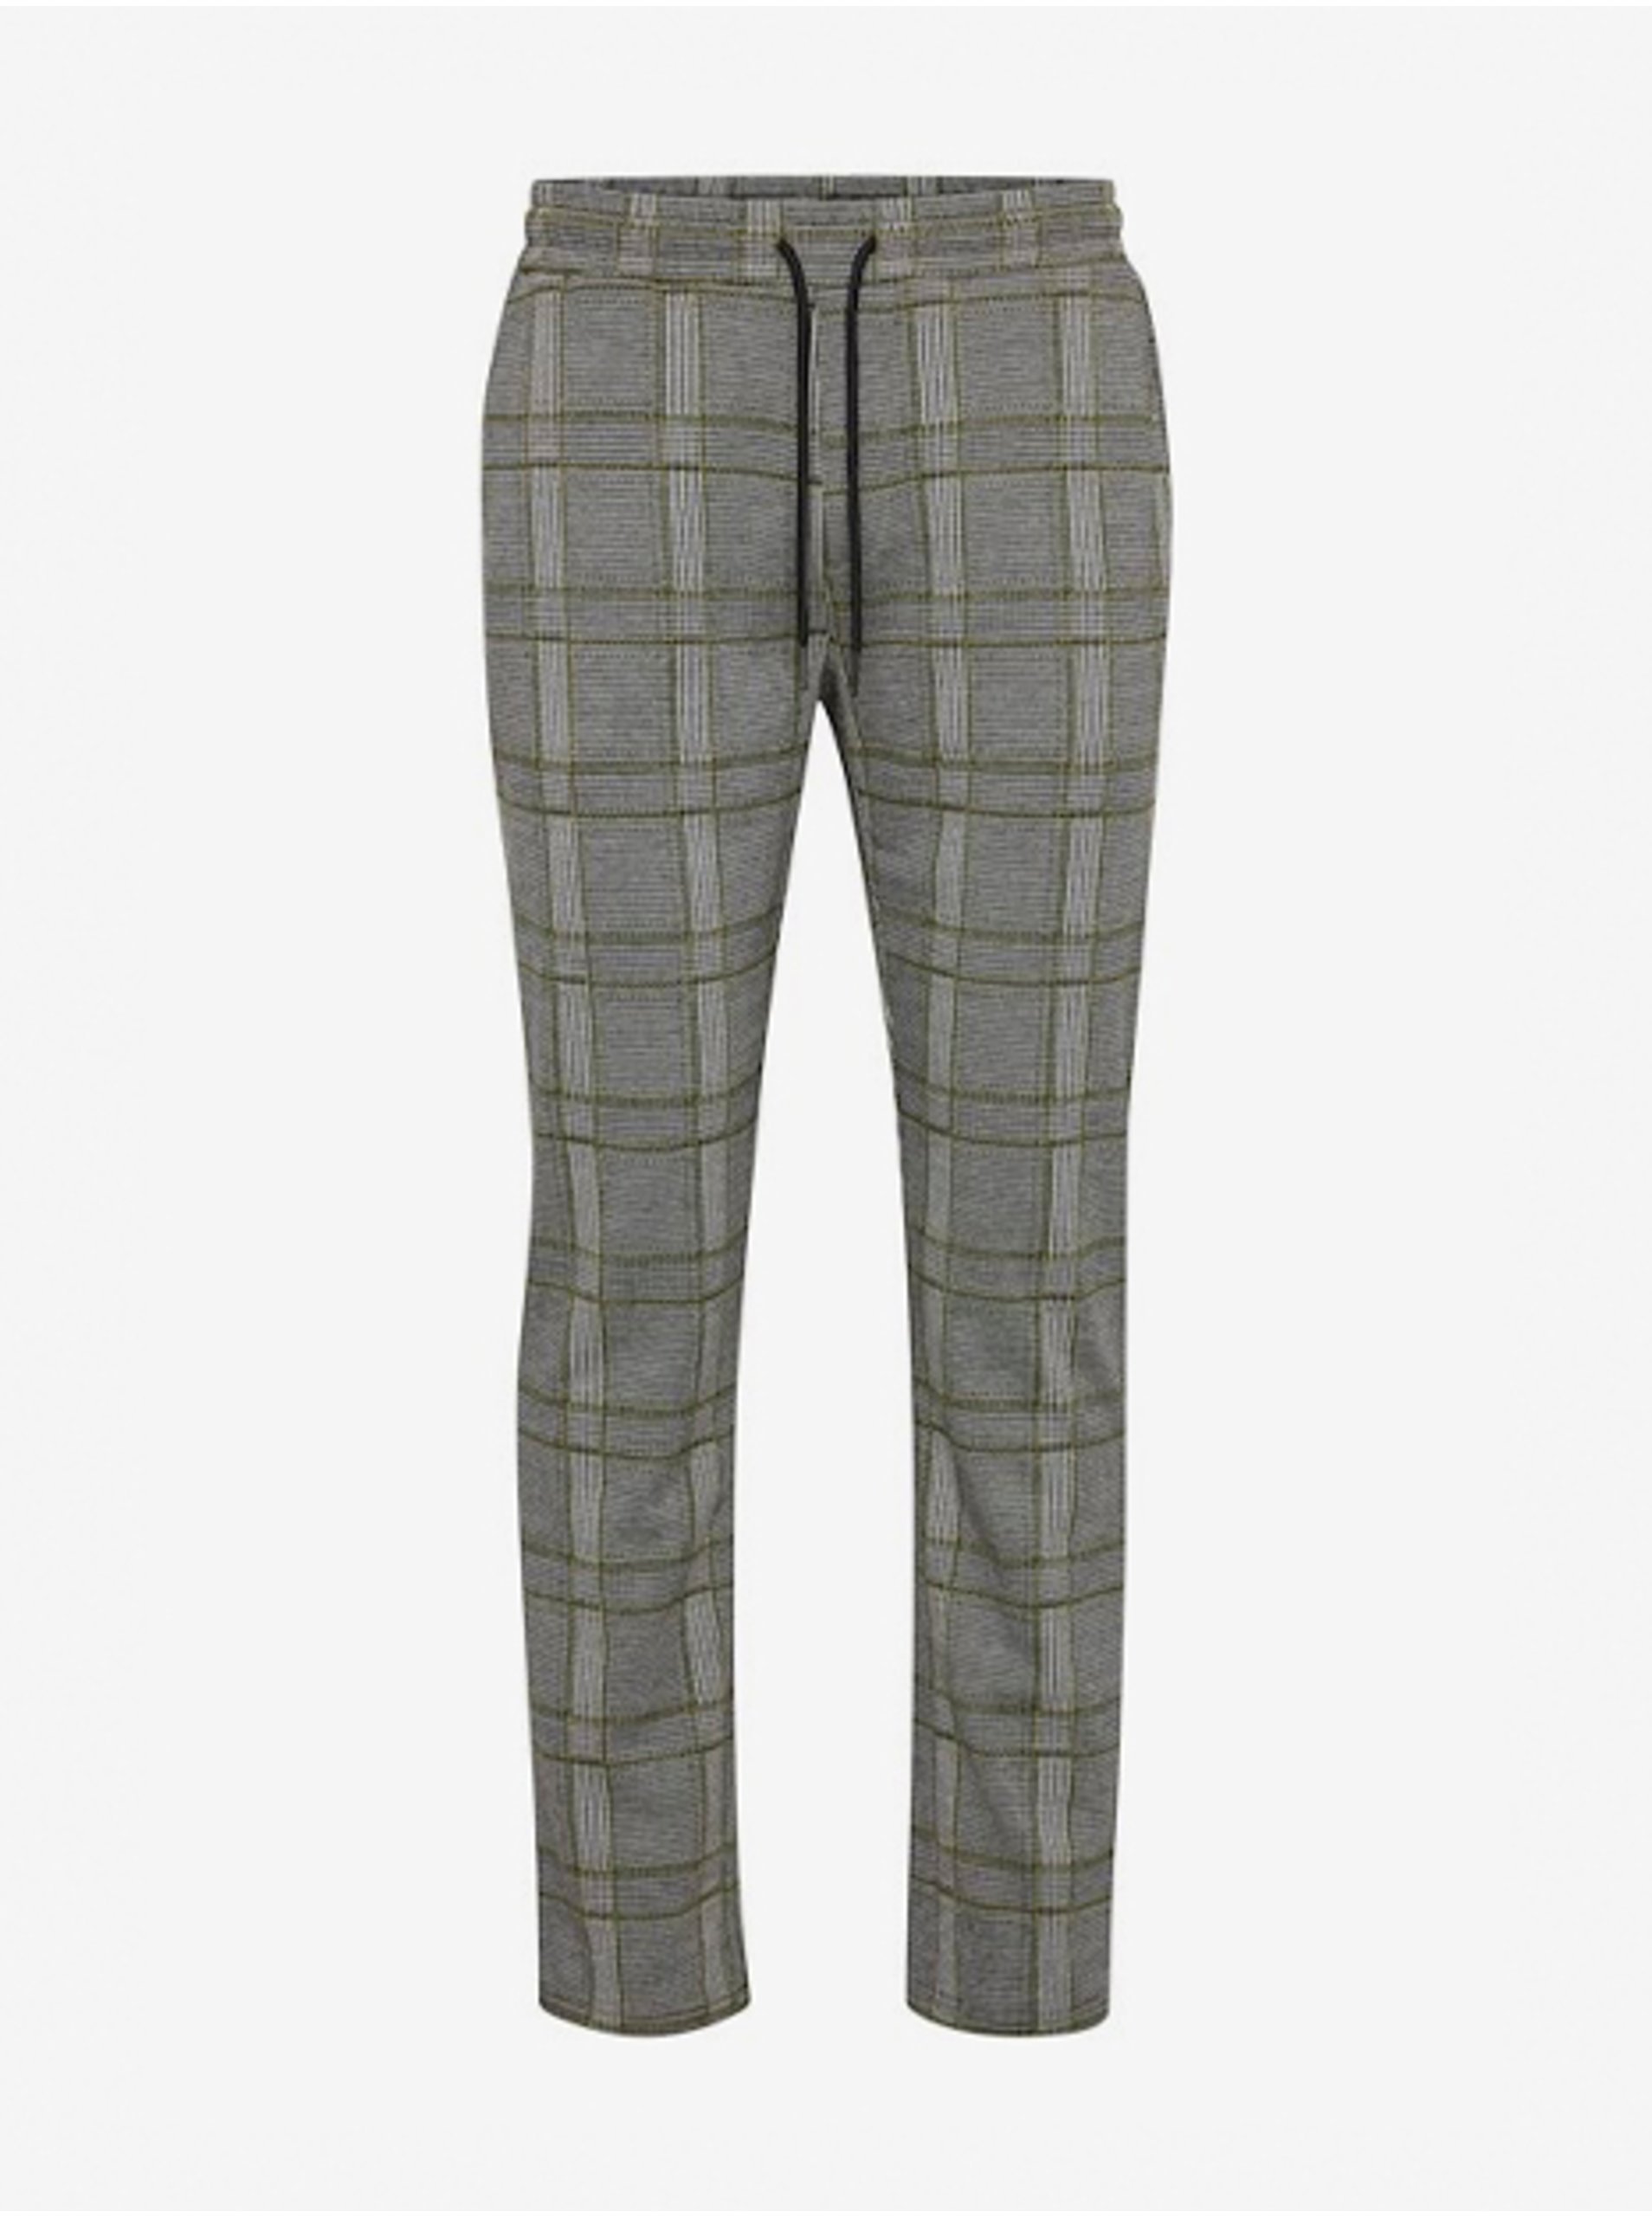 Grey Checkered Pants Blend - Men